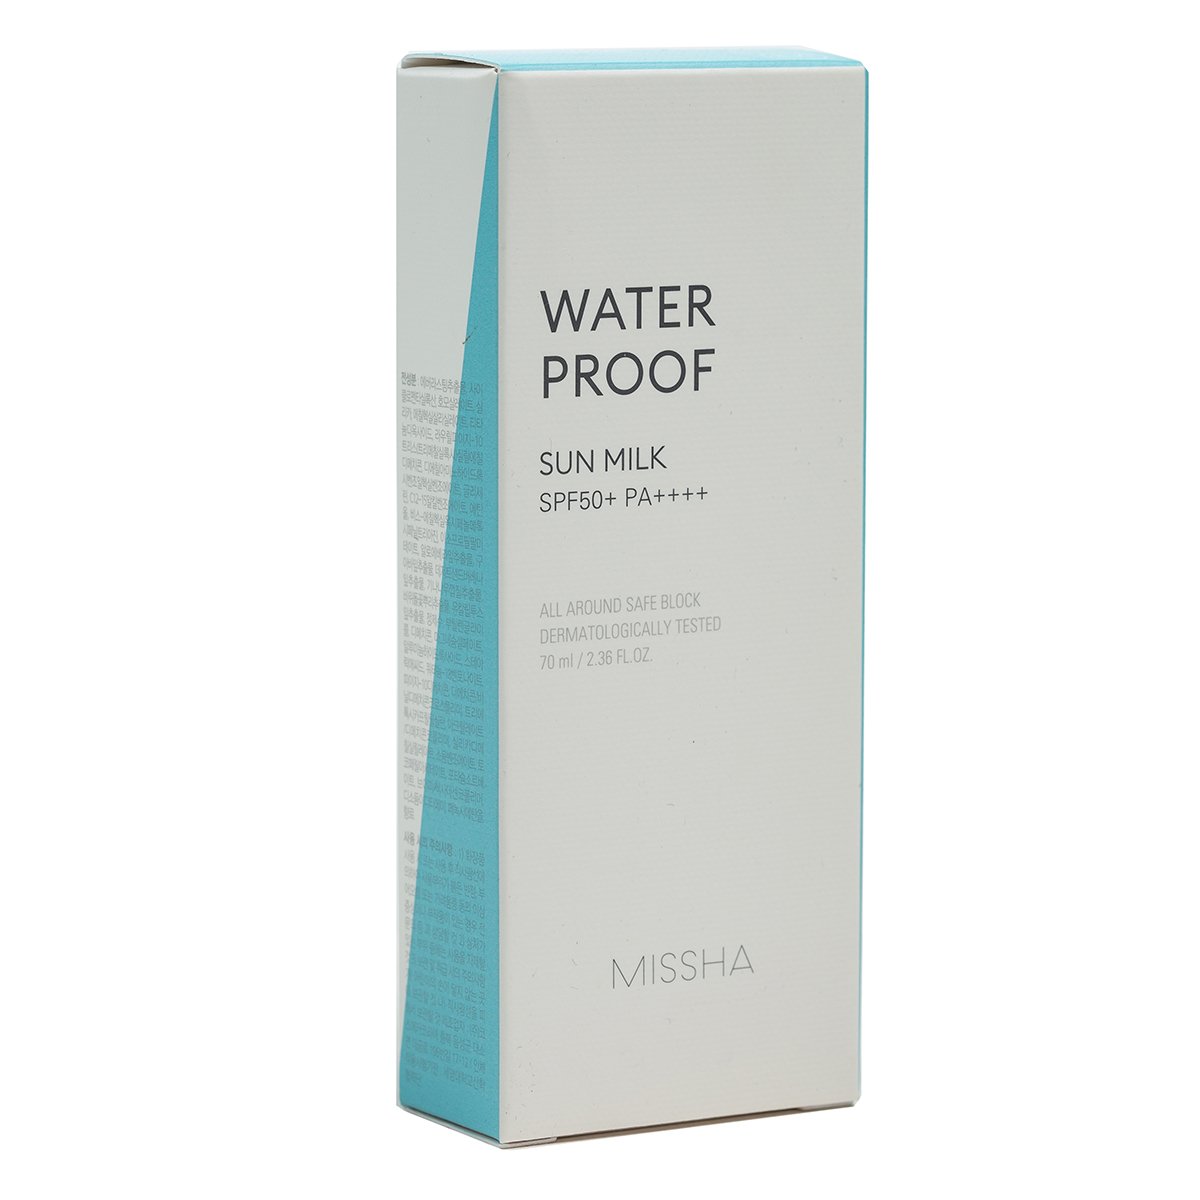 Солнцезащитное водостойкое молочко Missha All-around Safe Block Water Proof, SPF50+, PA+++, 70 мл - фото 3